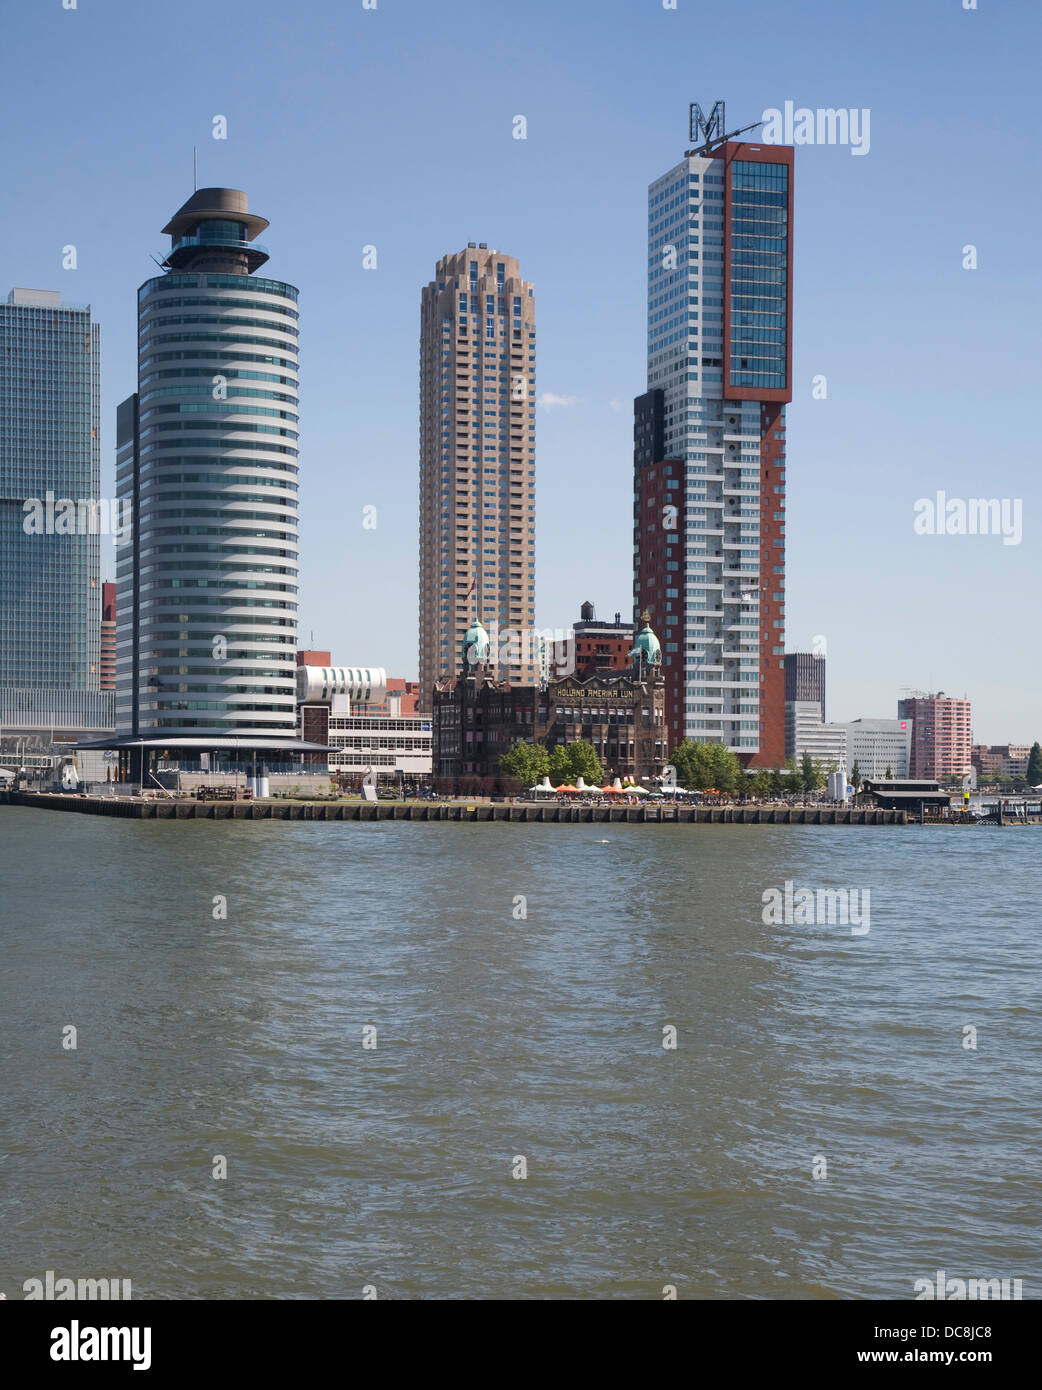 Hotel New York dwarfed by modern high rise buildings Rotterdam Netherlands Stock Photo